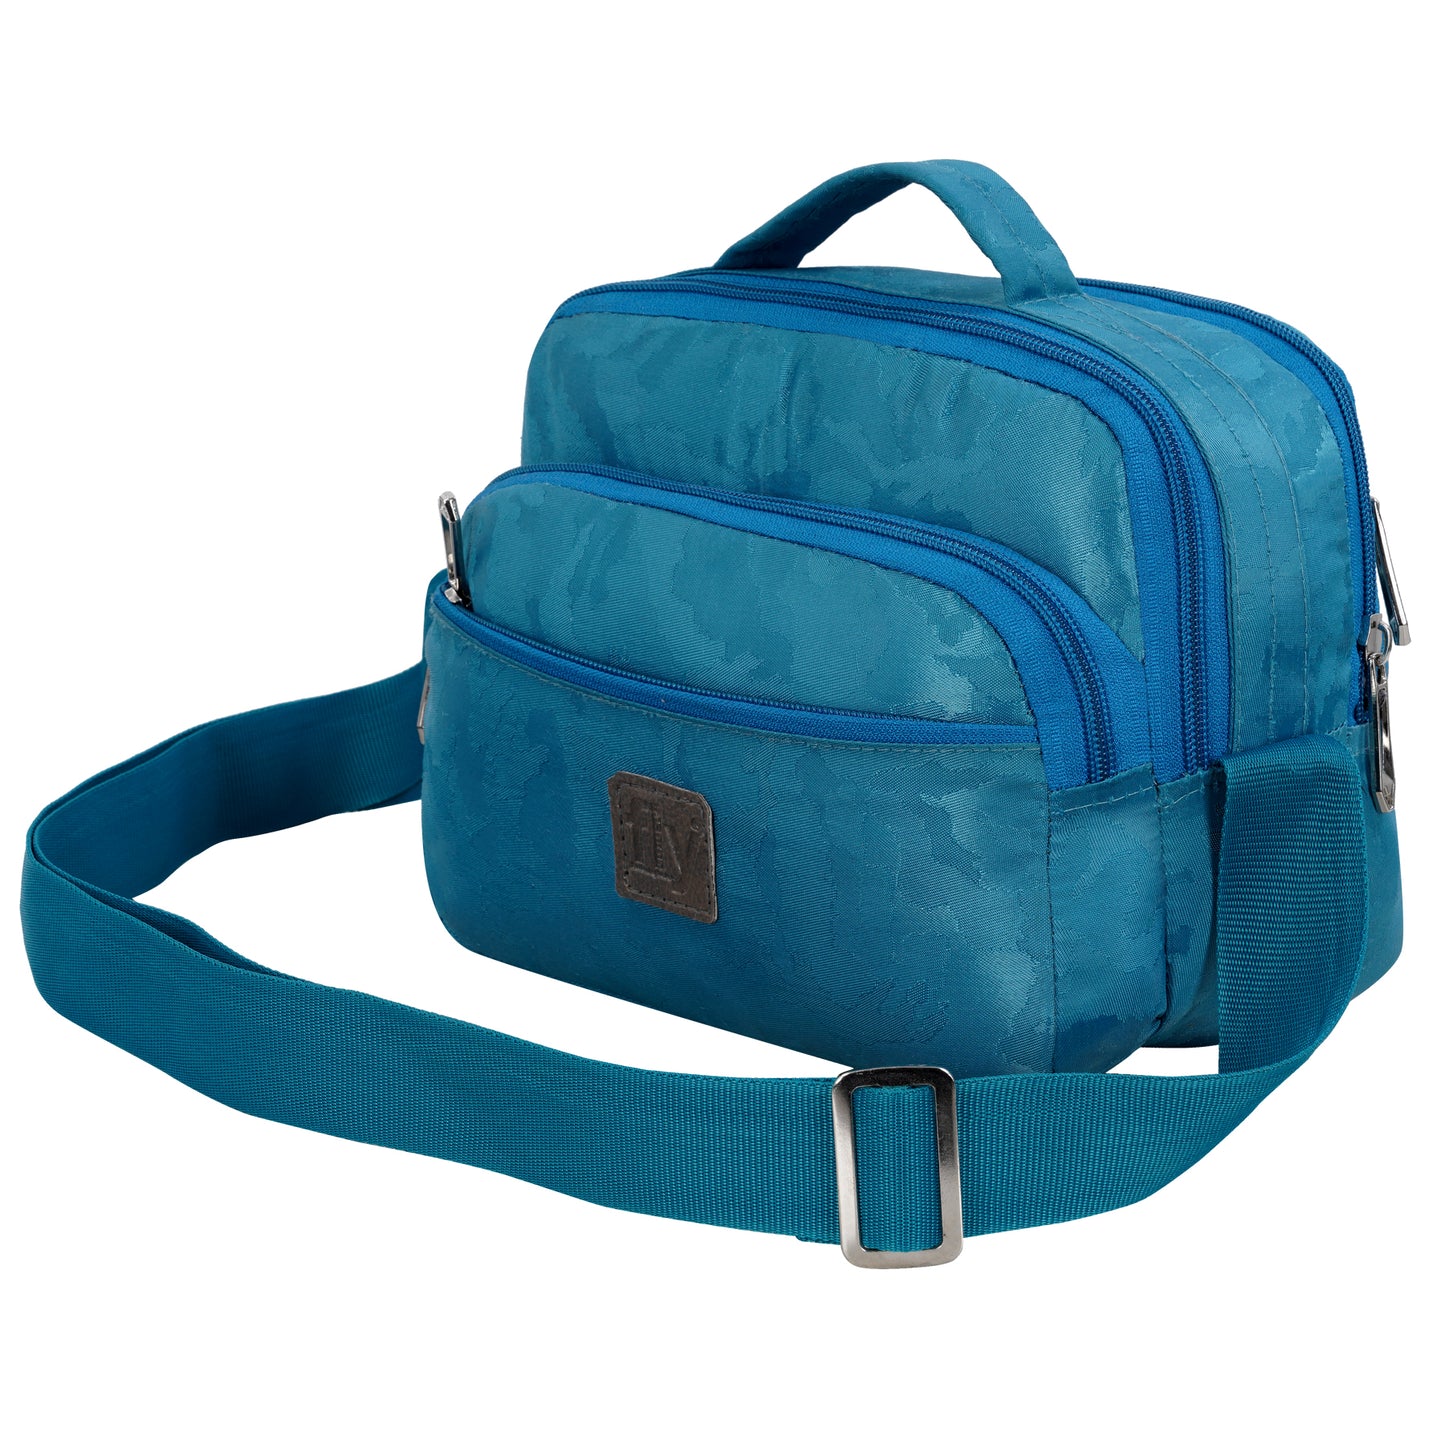 Fly Fashion Sling Bag | Cross-Body Bags With Adjustable Shoulder Strap | Ladies Purse Handbag - Blue